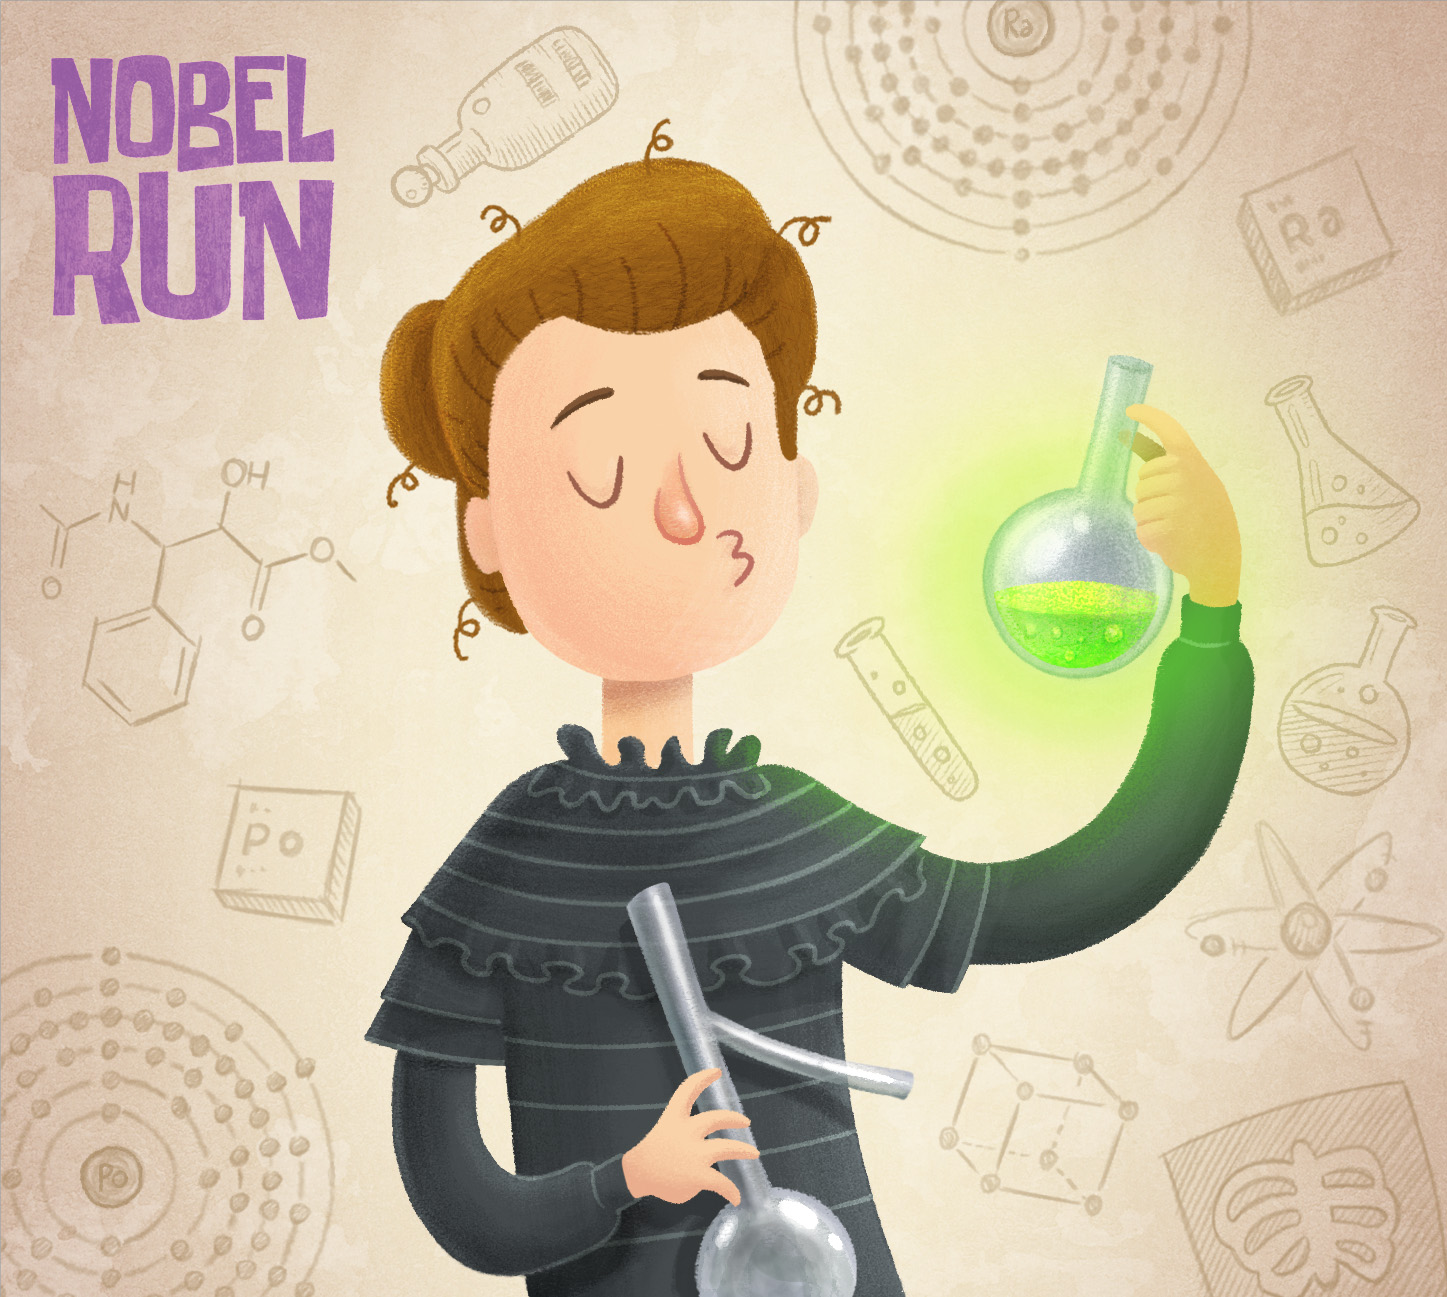 Marie Skłodowska-Curie - Nobel Run Stories | Gearing Roles